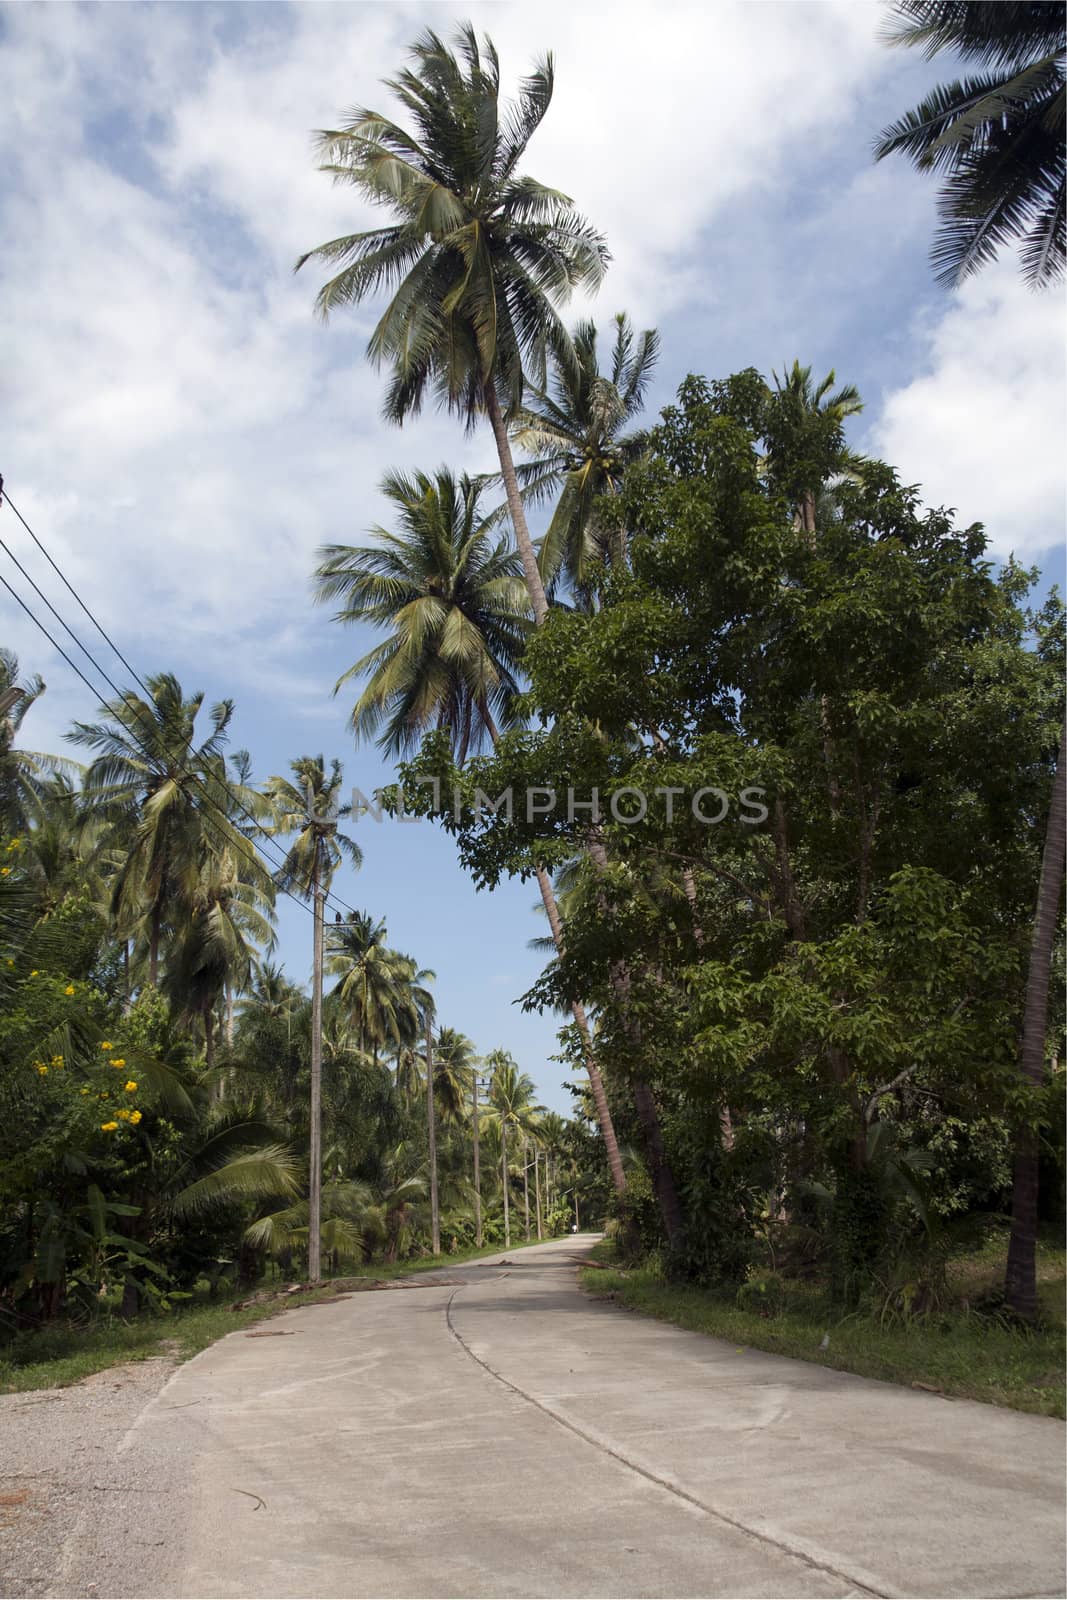 Road through coconut plantation, Tap Sakae, Thailand